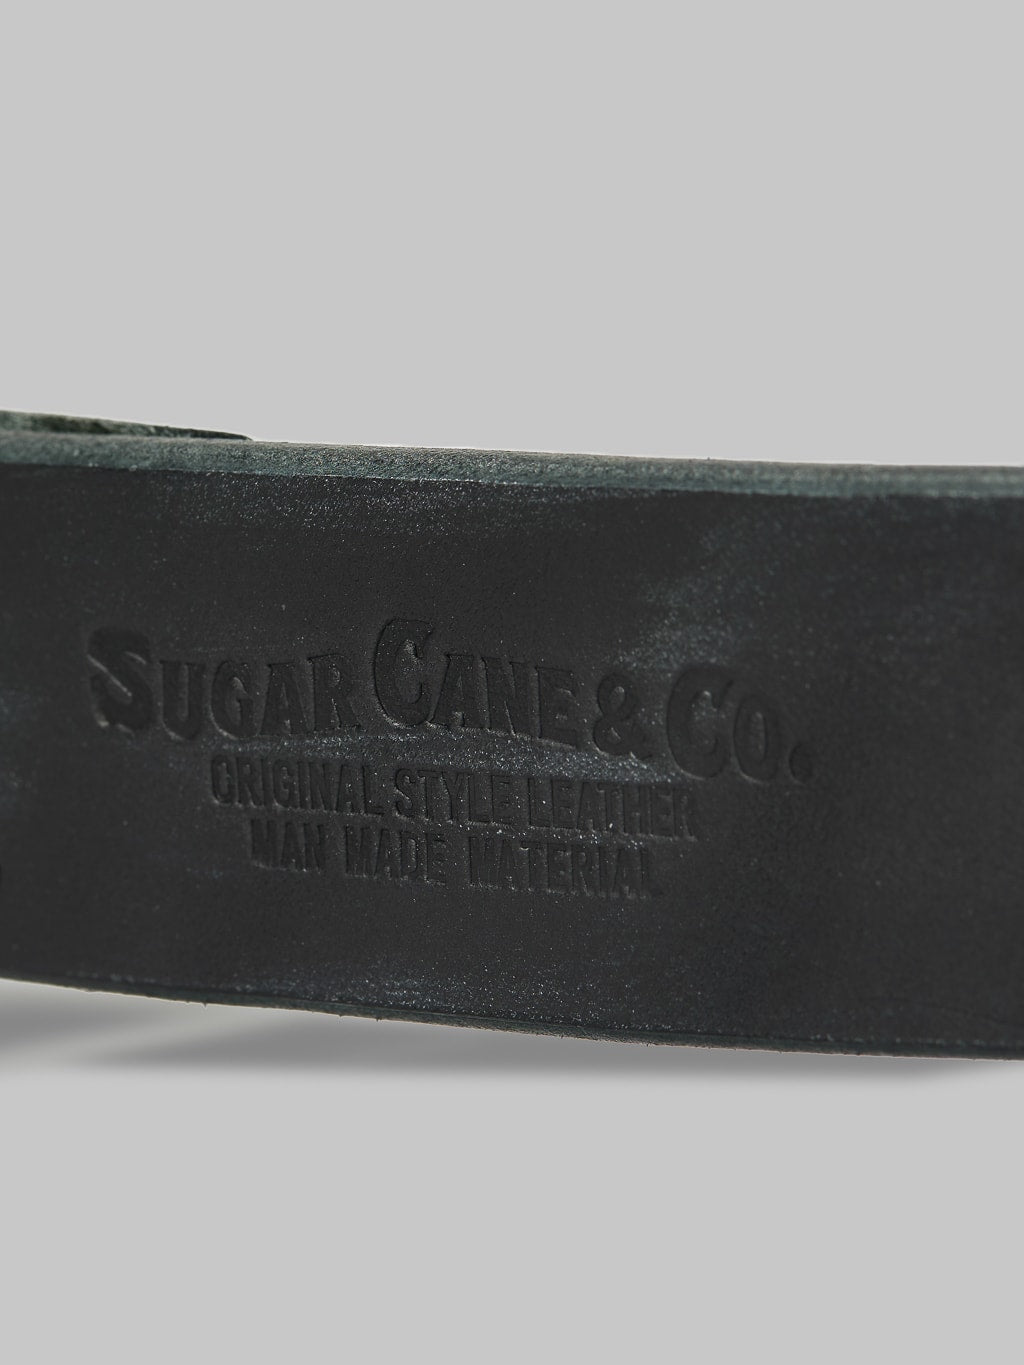 Sugar Cane leather garrison belt black interior logo stamped